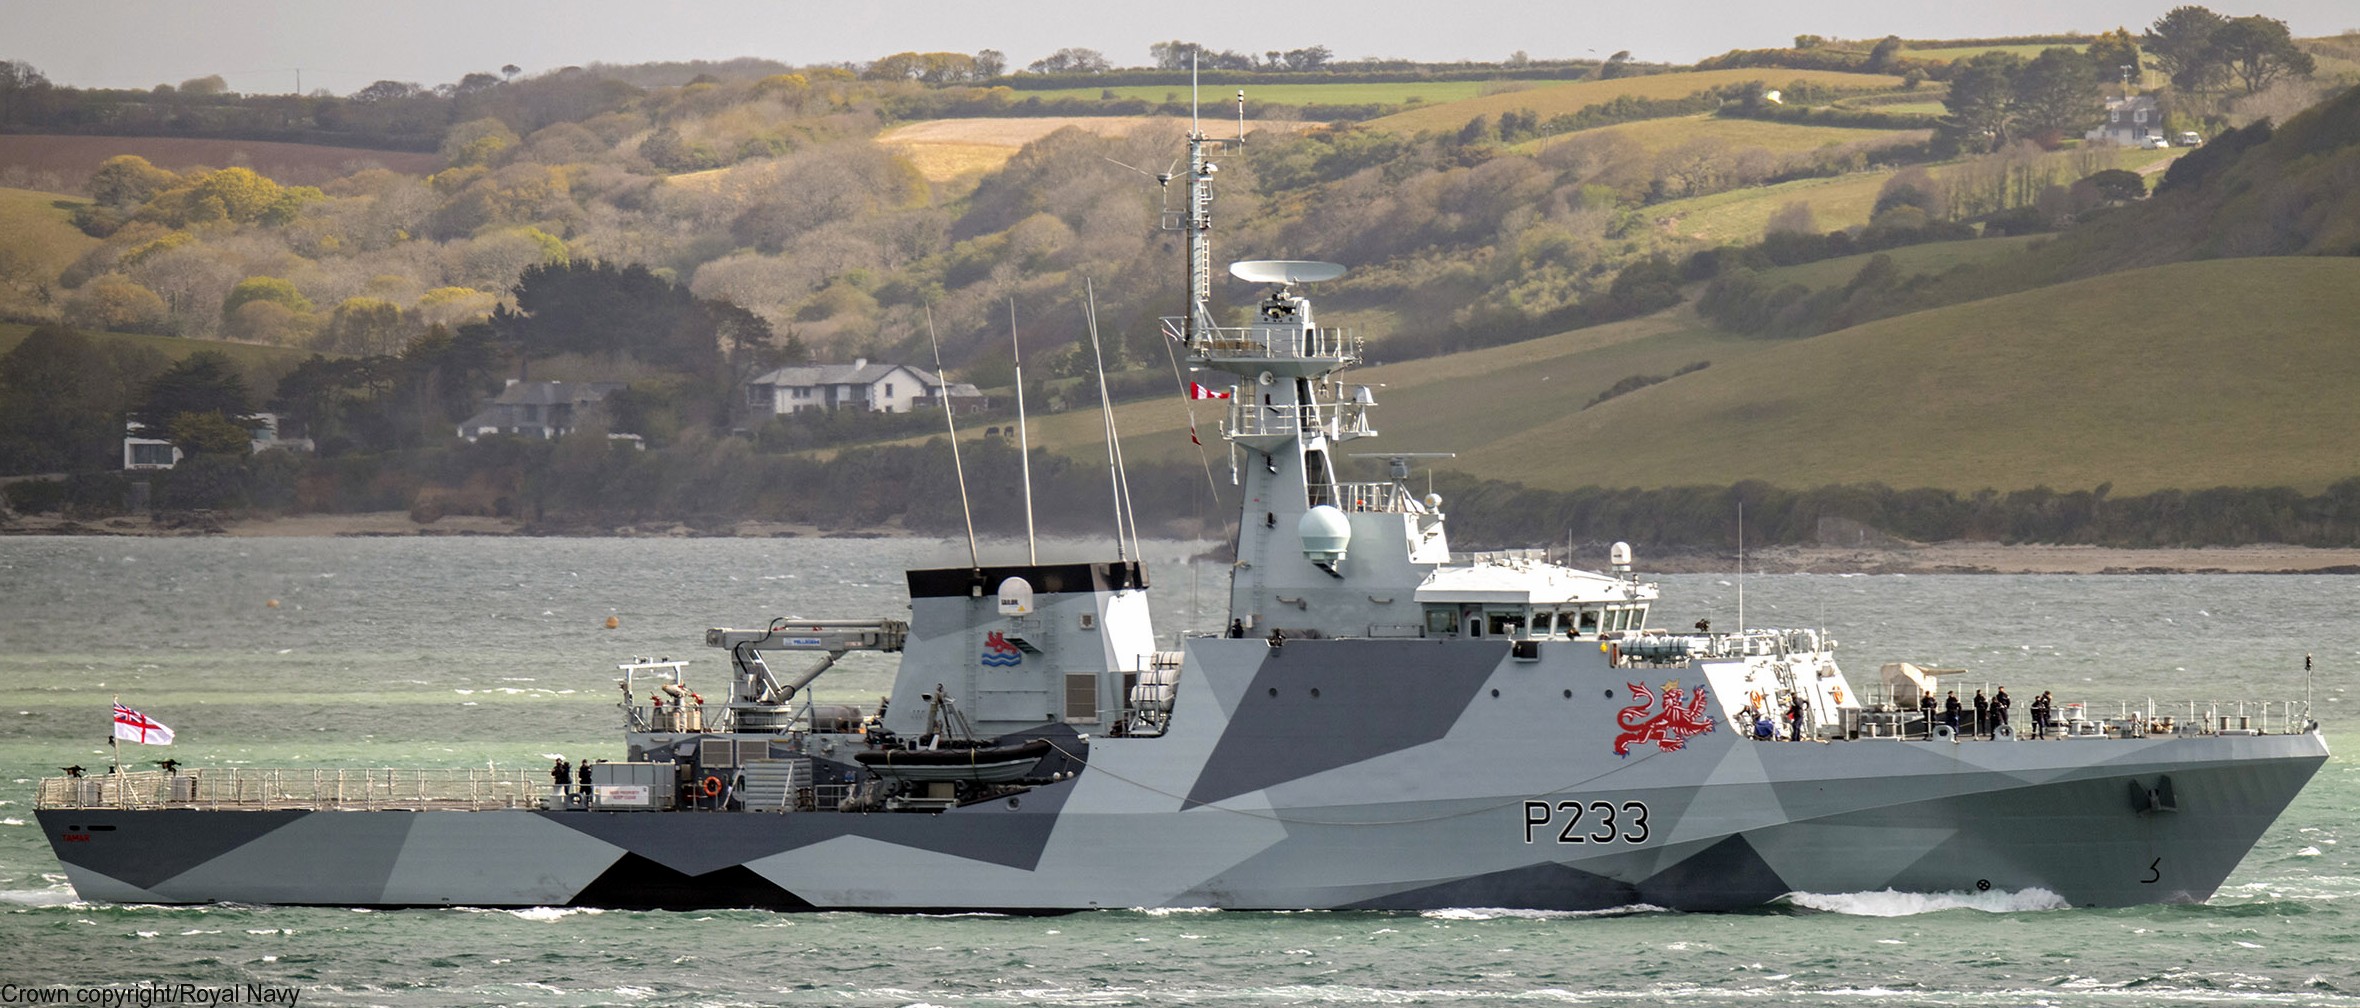 p-233 hms tamar river class offshore patrol vessel opv royal navy 17